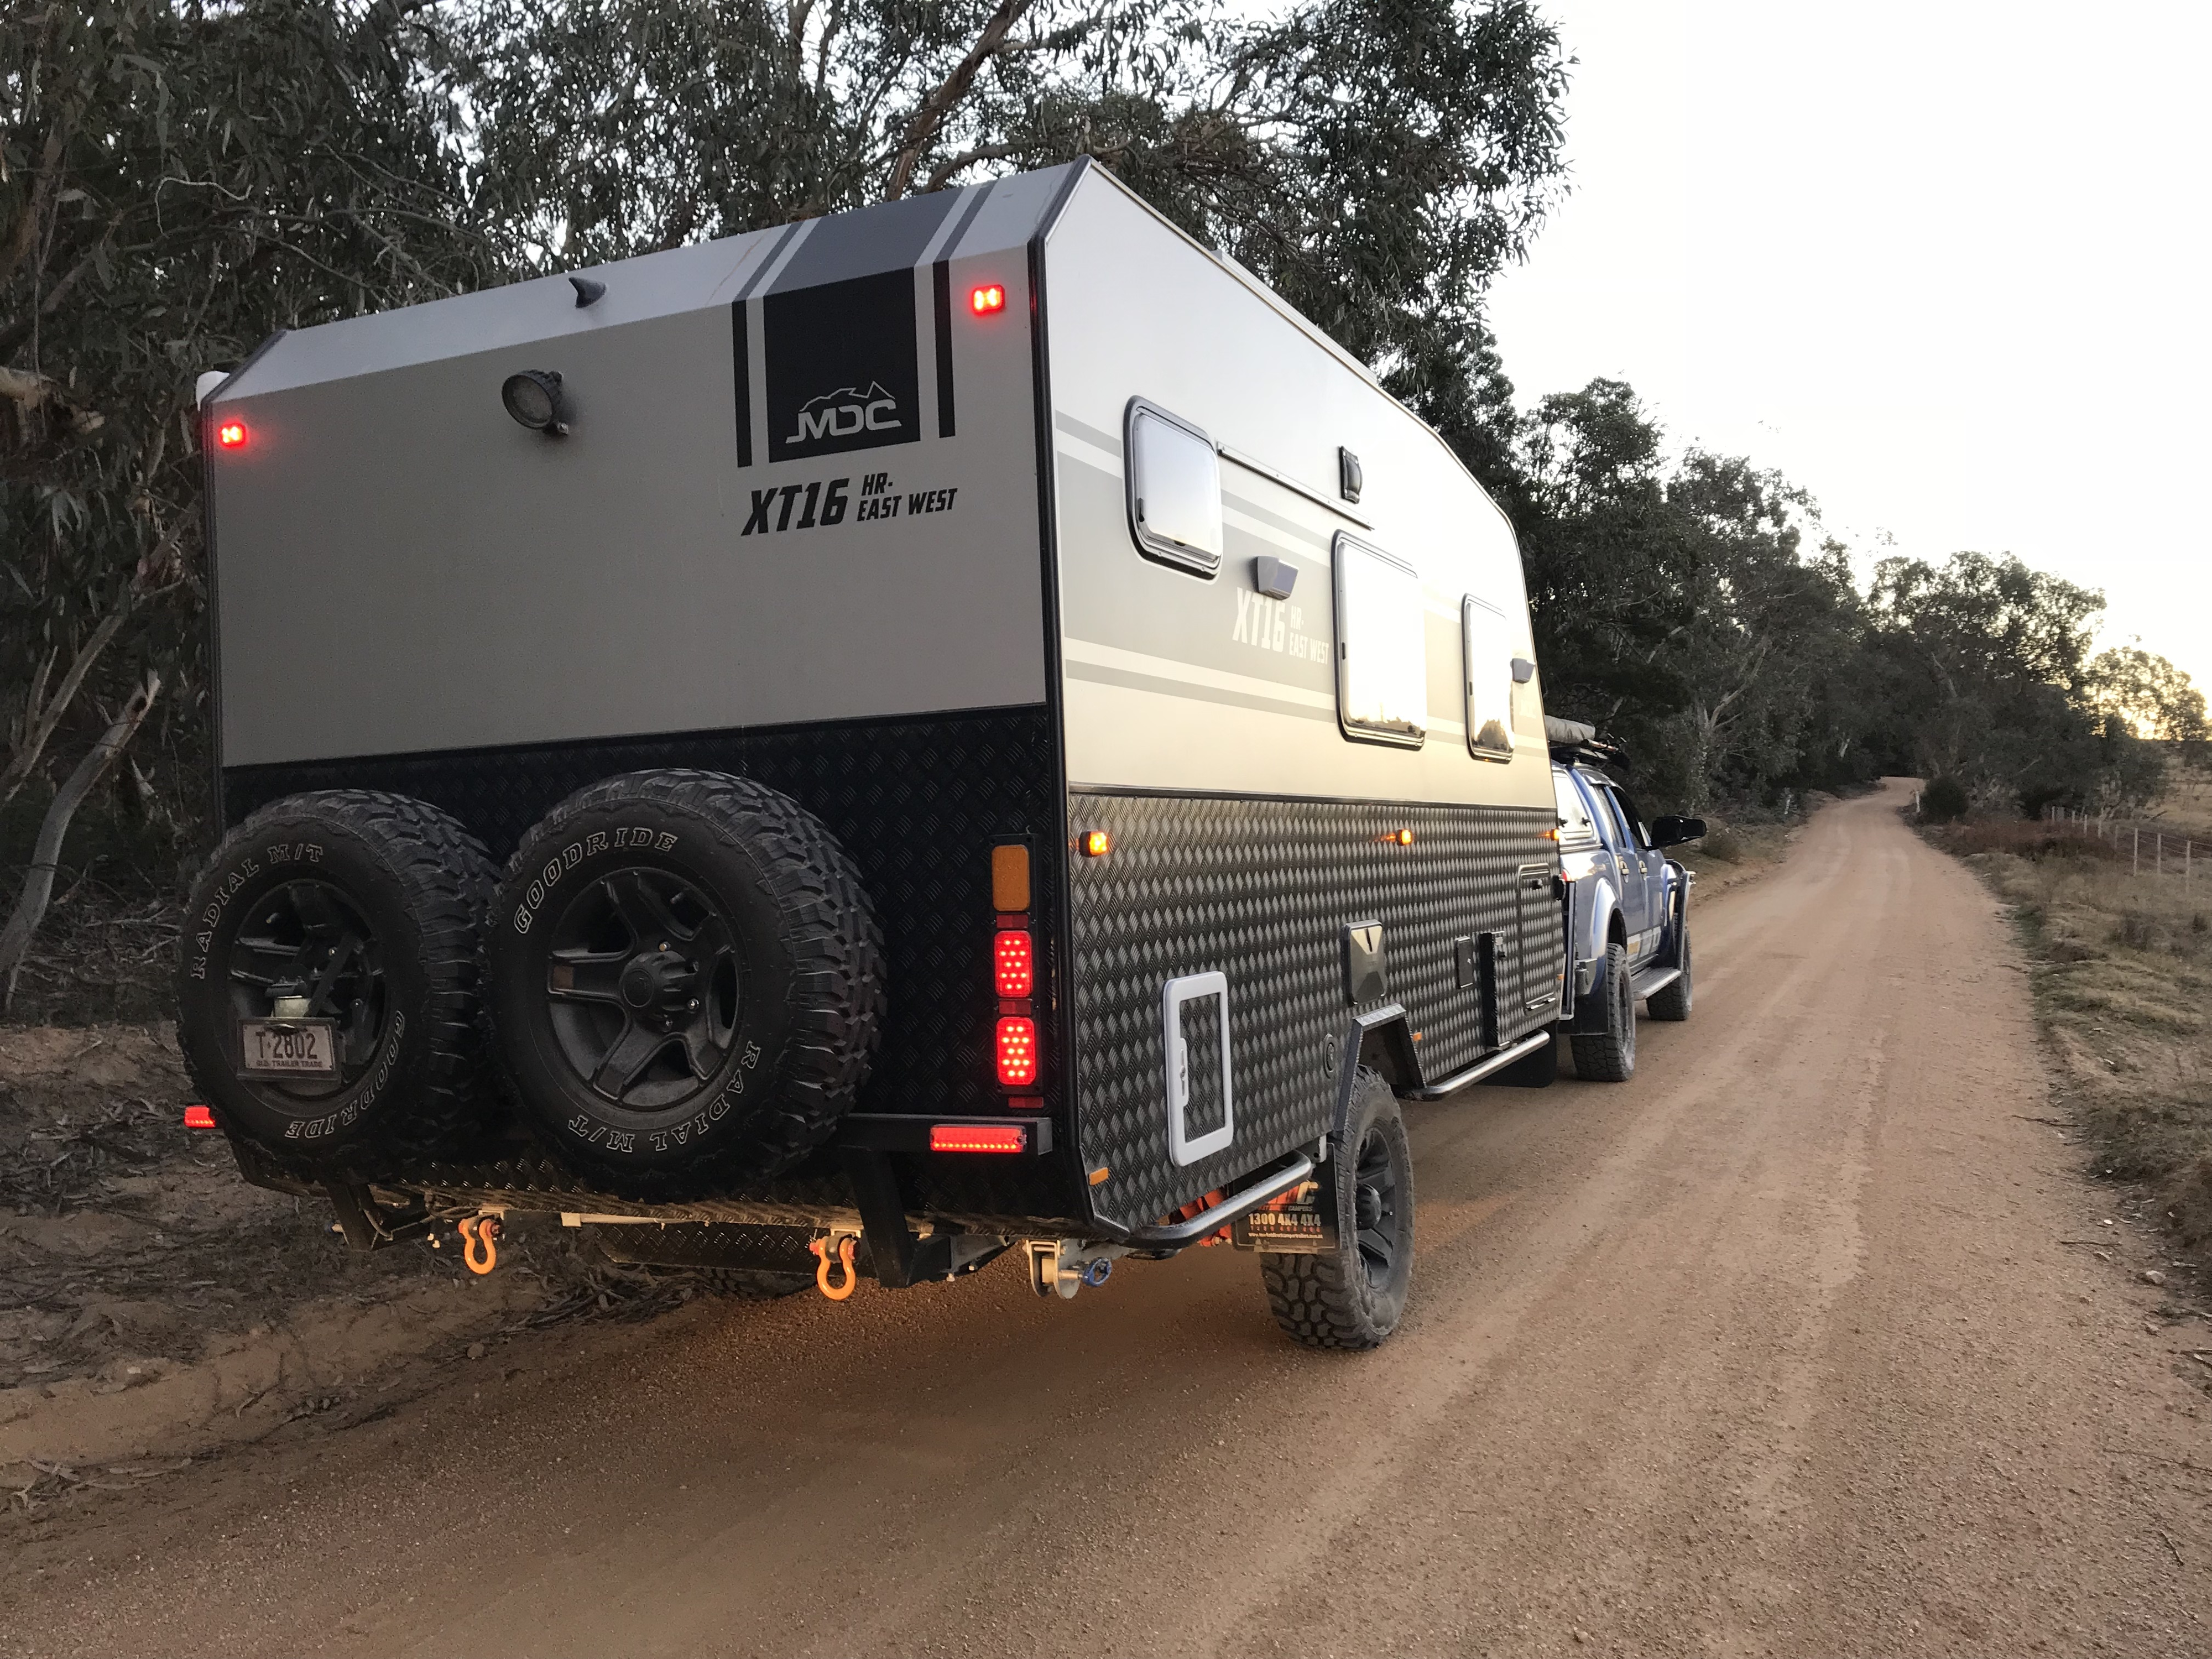 Road Trips Australia Episode 13